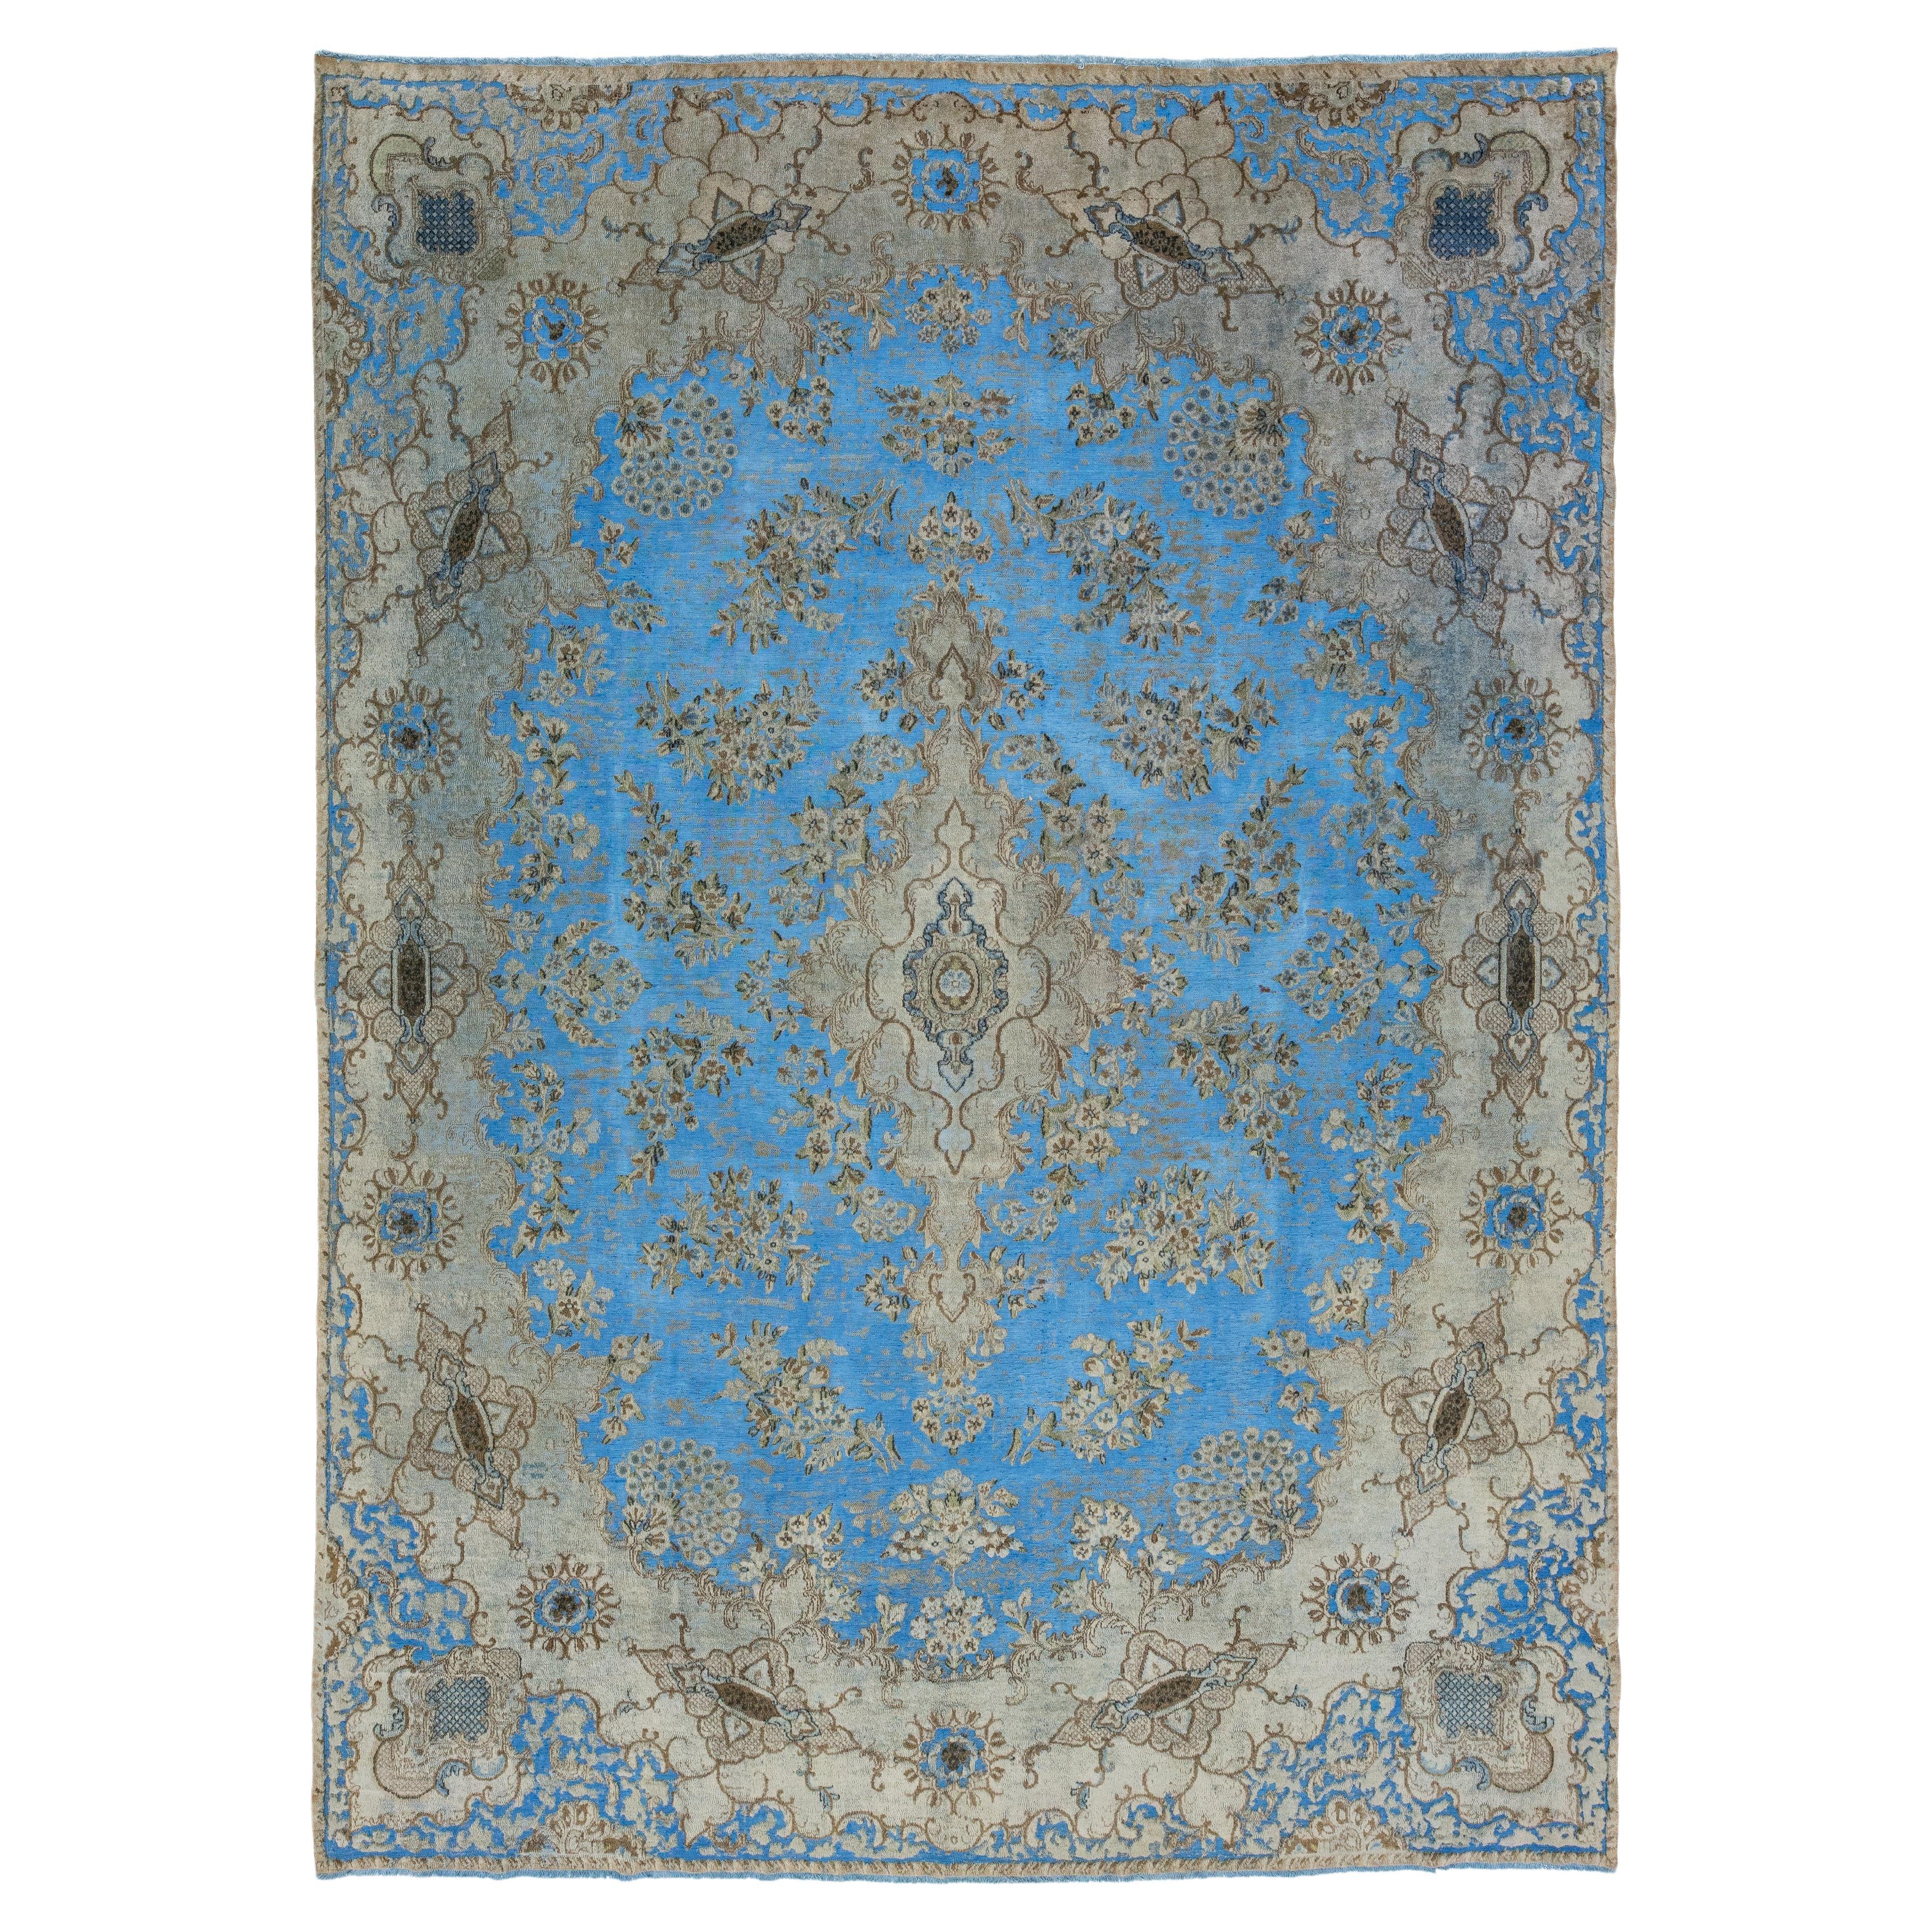 Tapis persan ancien bleu clair teinté avec motif de médaillon